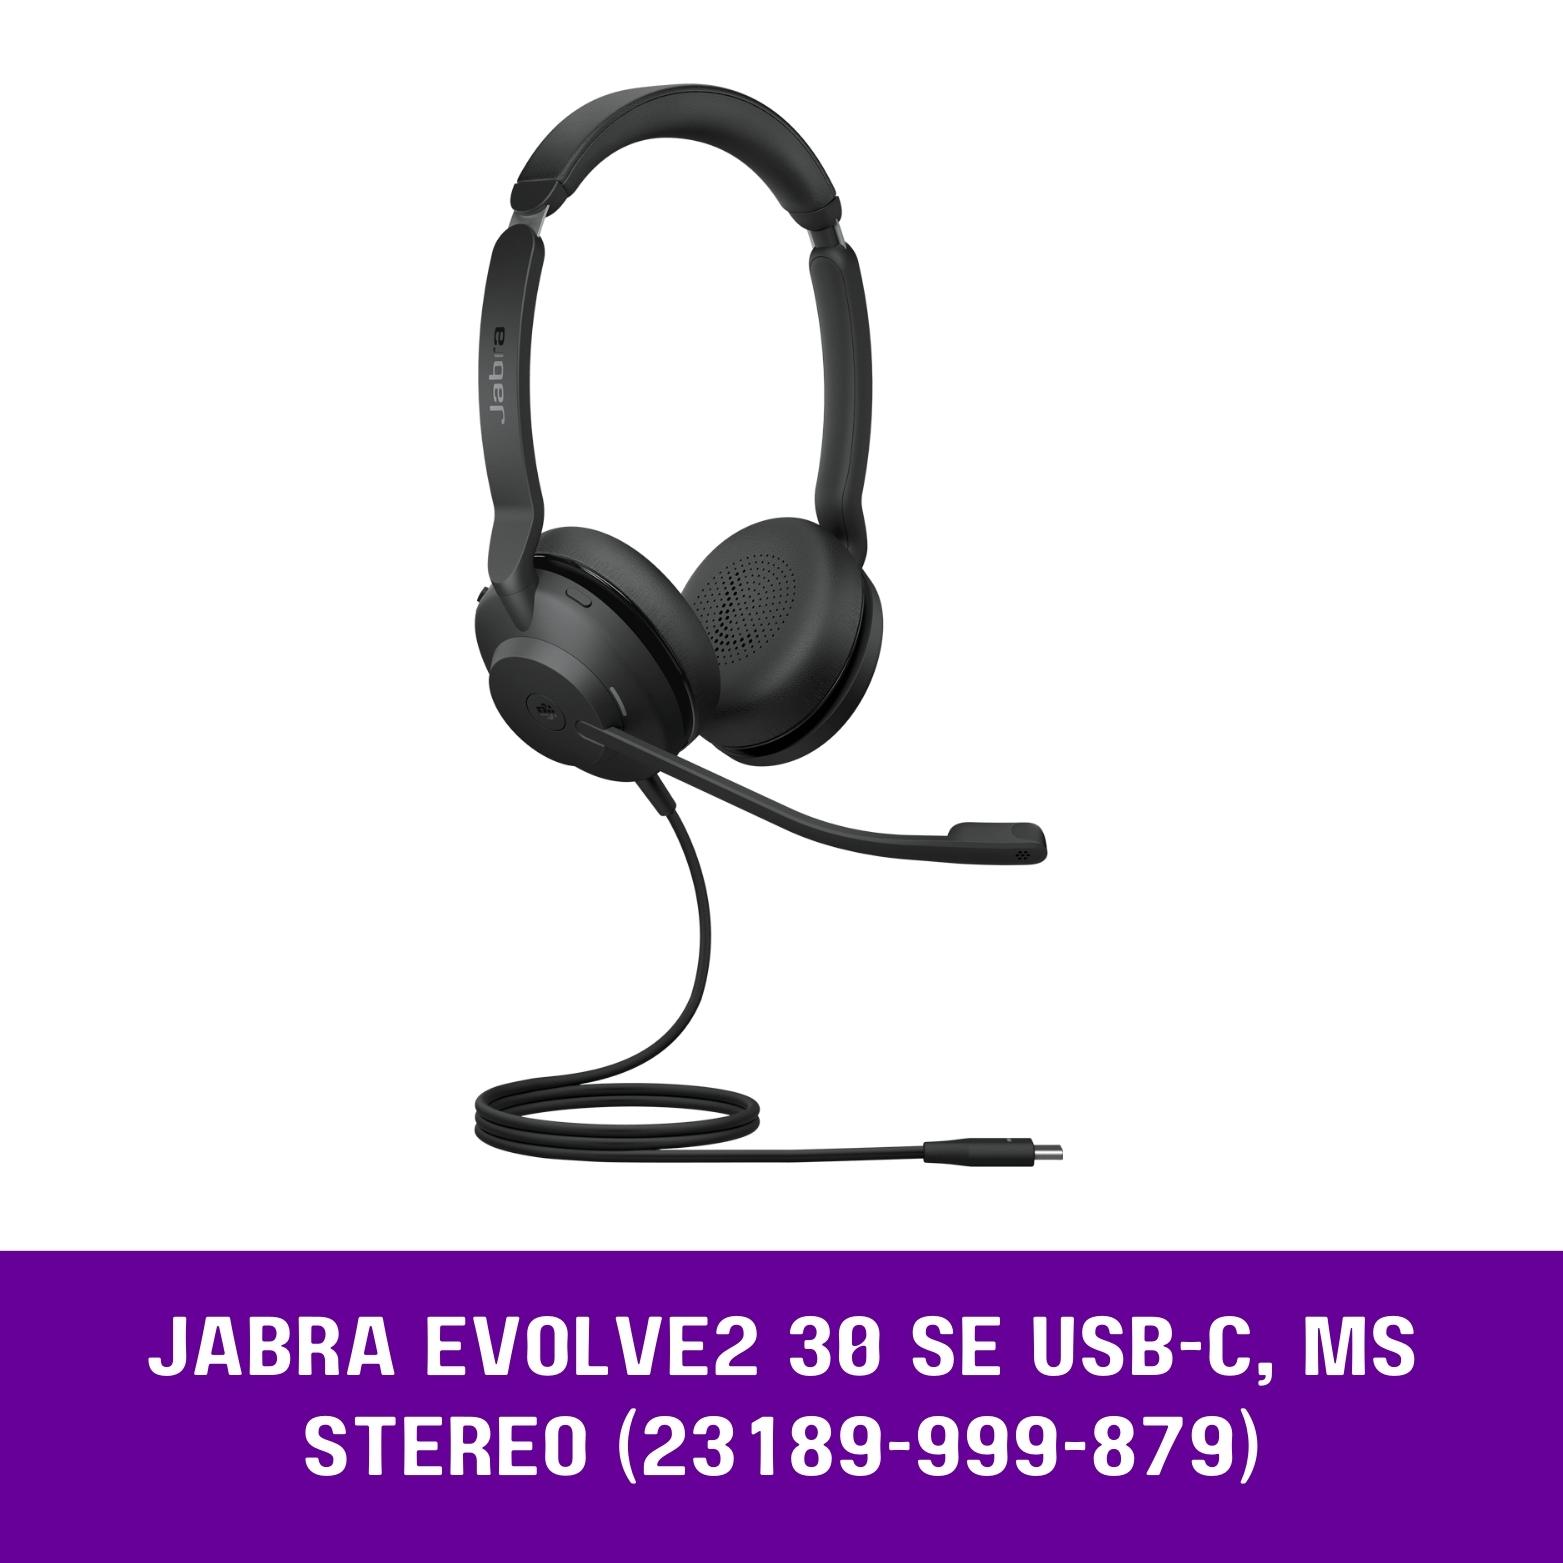 Jabra Singapore, Jabra Headsets, Jabra Evolve2, Jabra Evolve2 65 Flex MS  Stereo ANC, Wireless Bluetooth Headset, USB-A (26699-999-999)